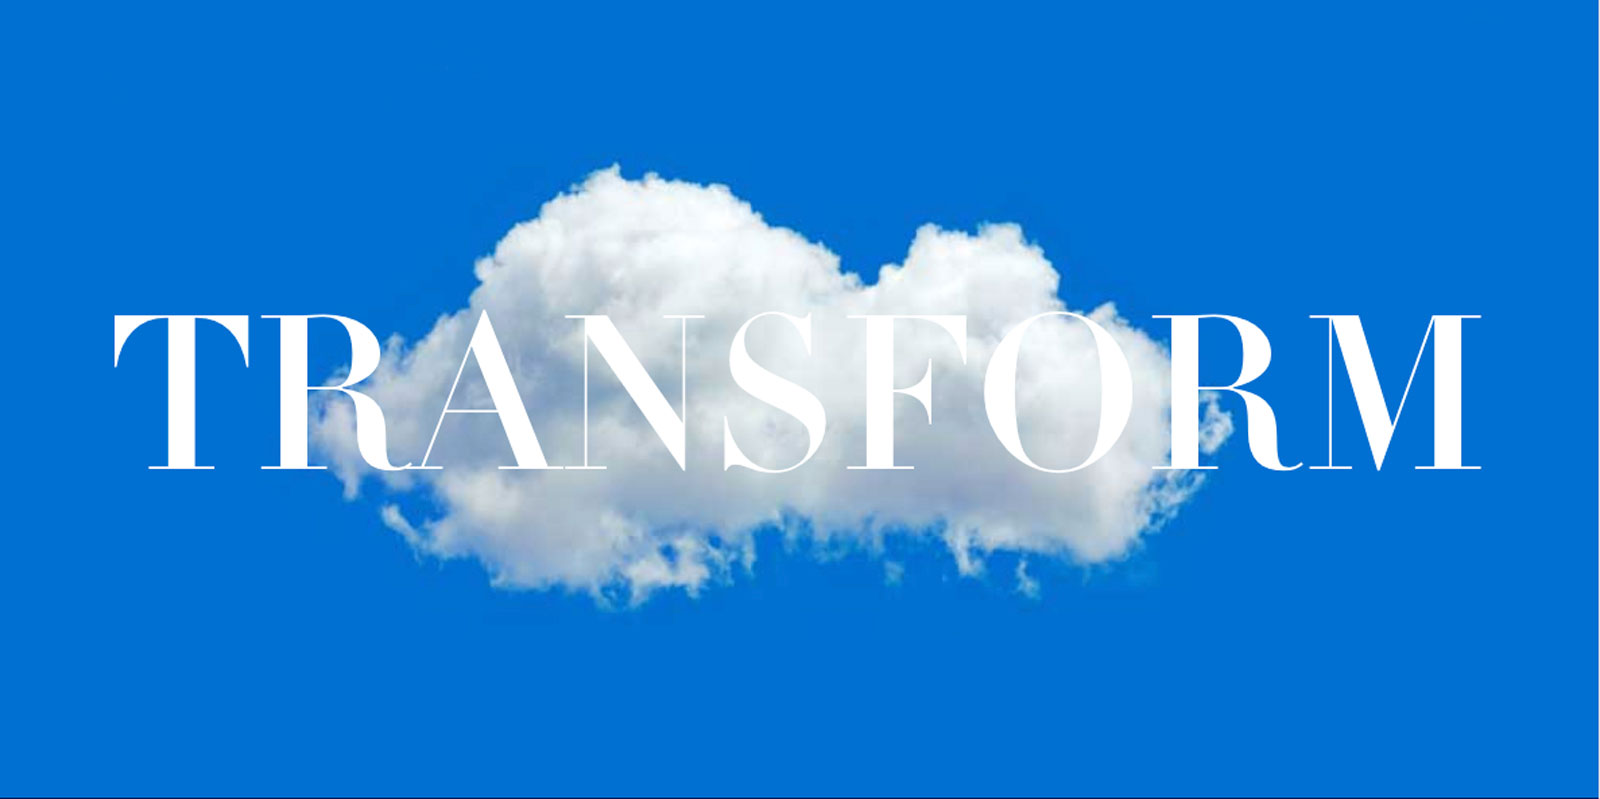 Lynne Burdon brand image cloud and transform